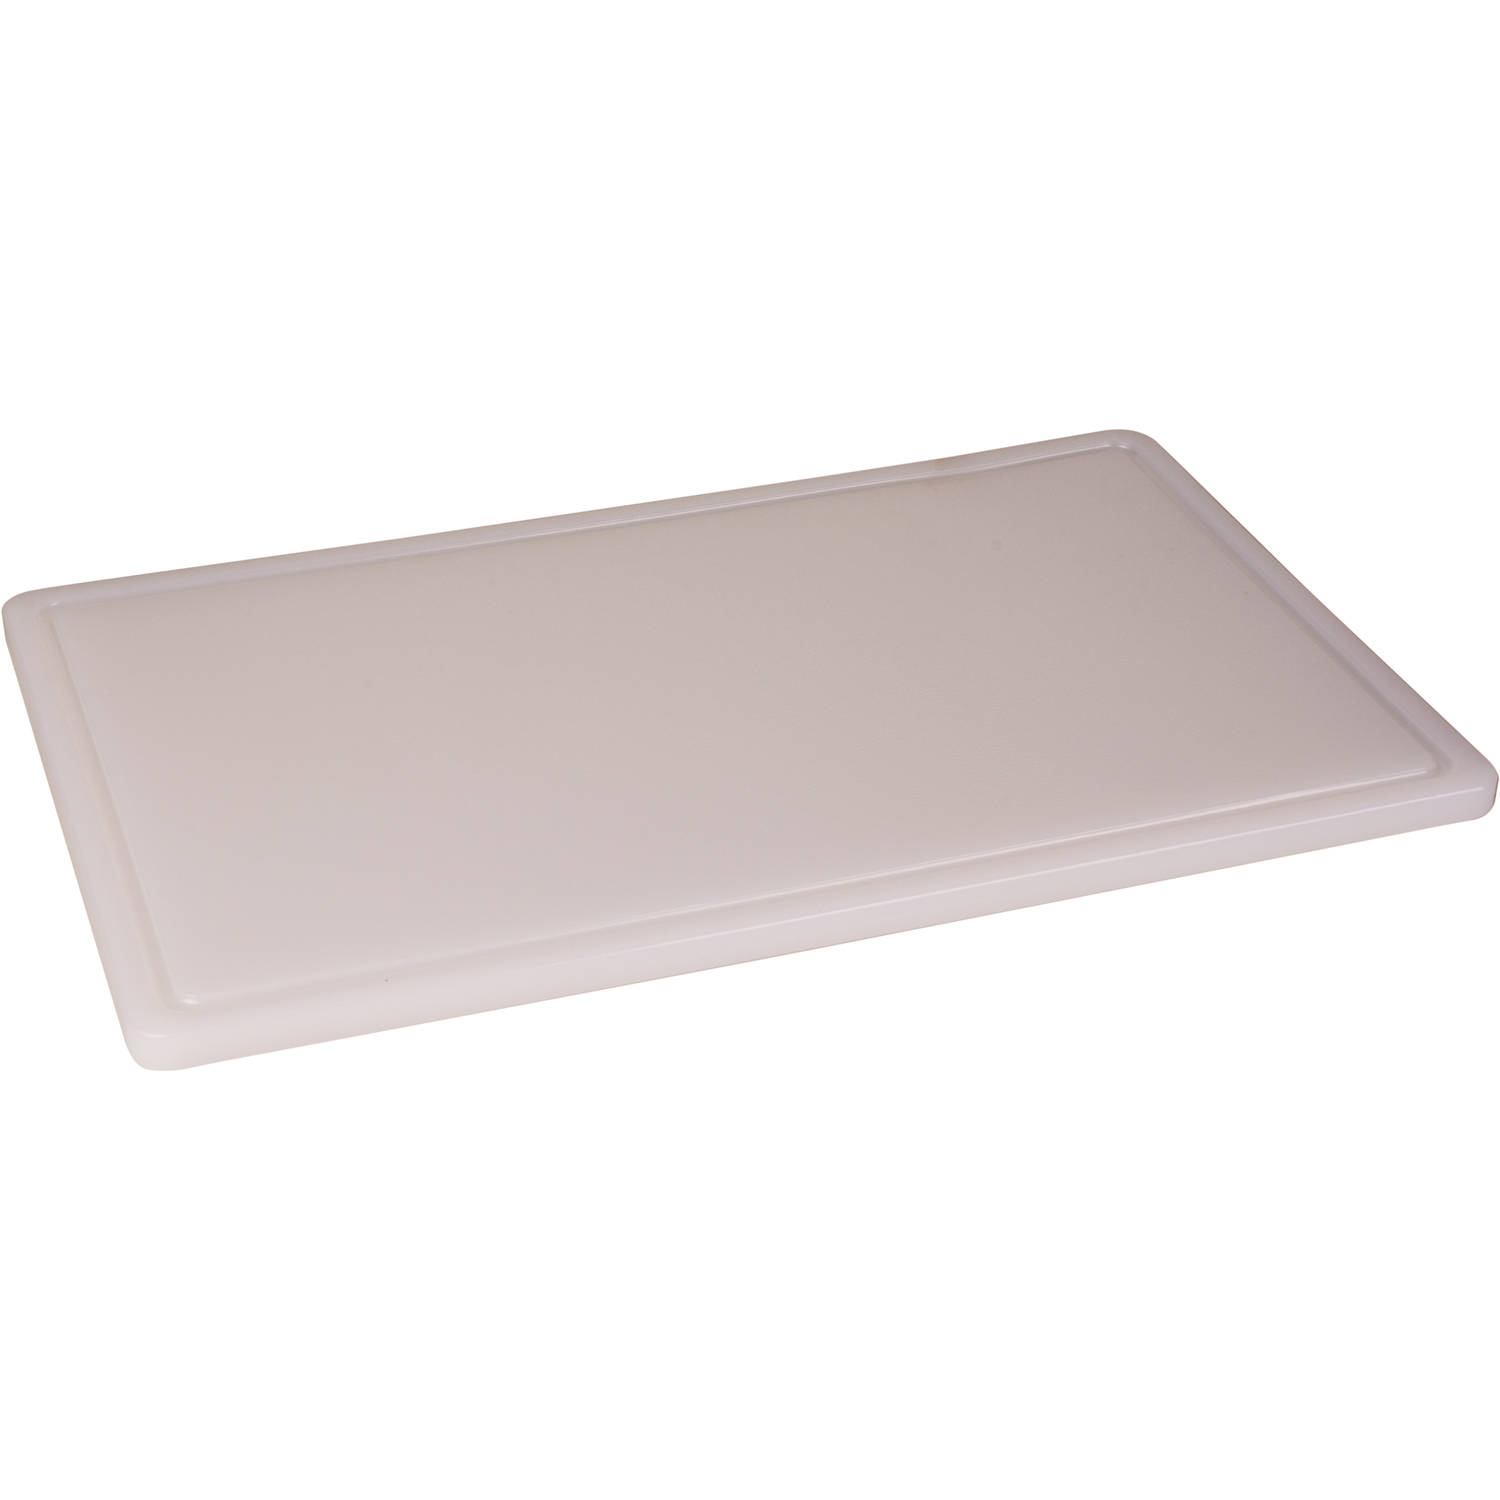 Snijplank met geul Hygiene 1/1 53 x 32.5 x 2 cm Polyethyleen Wit